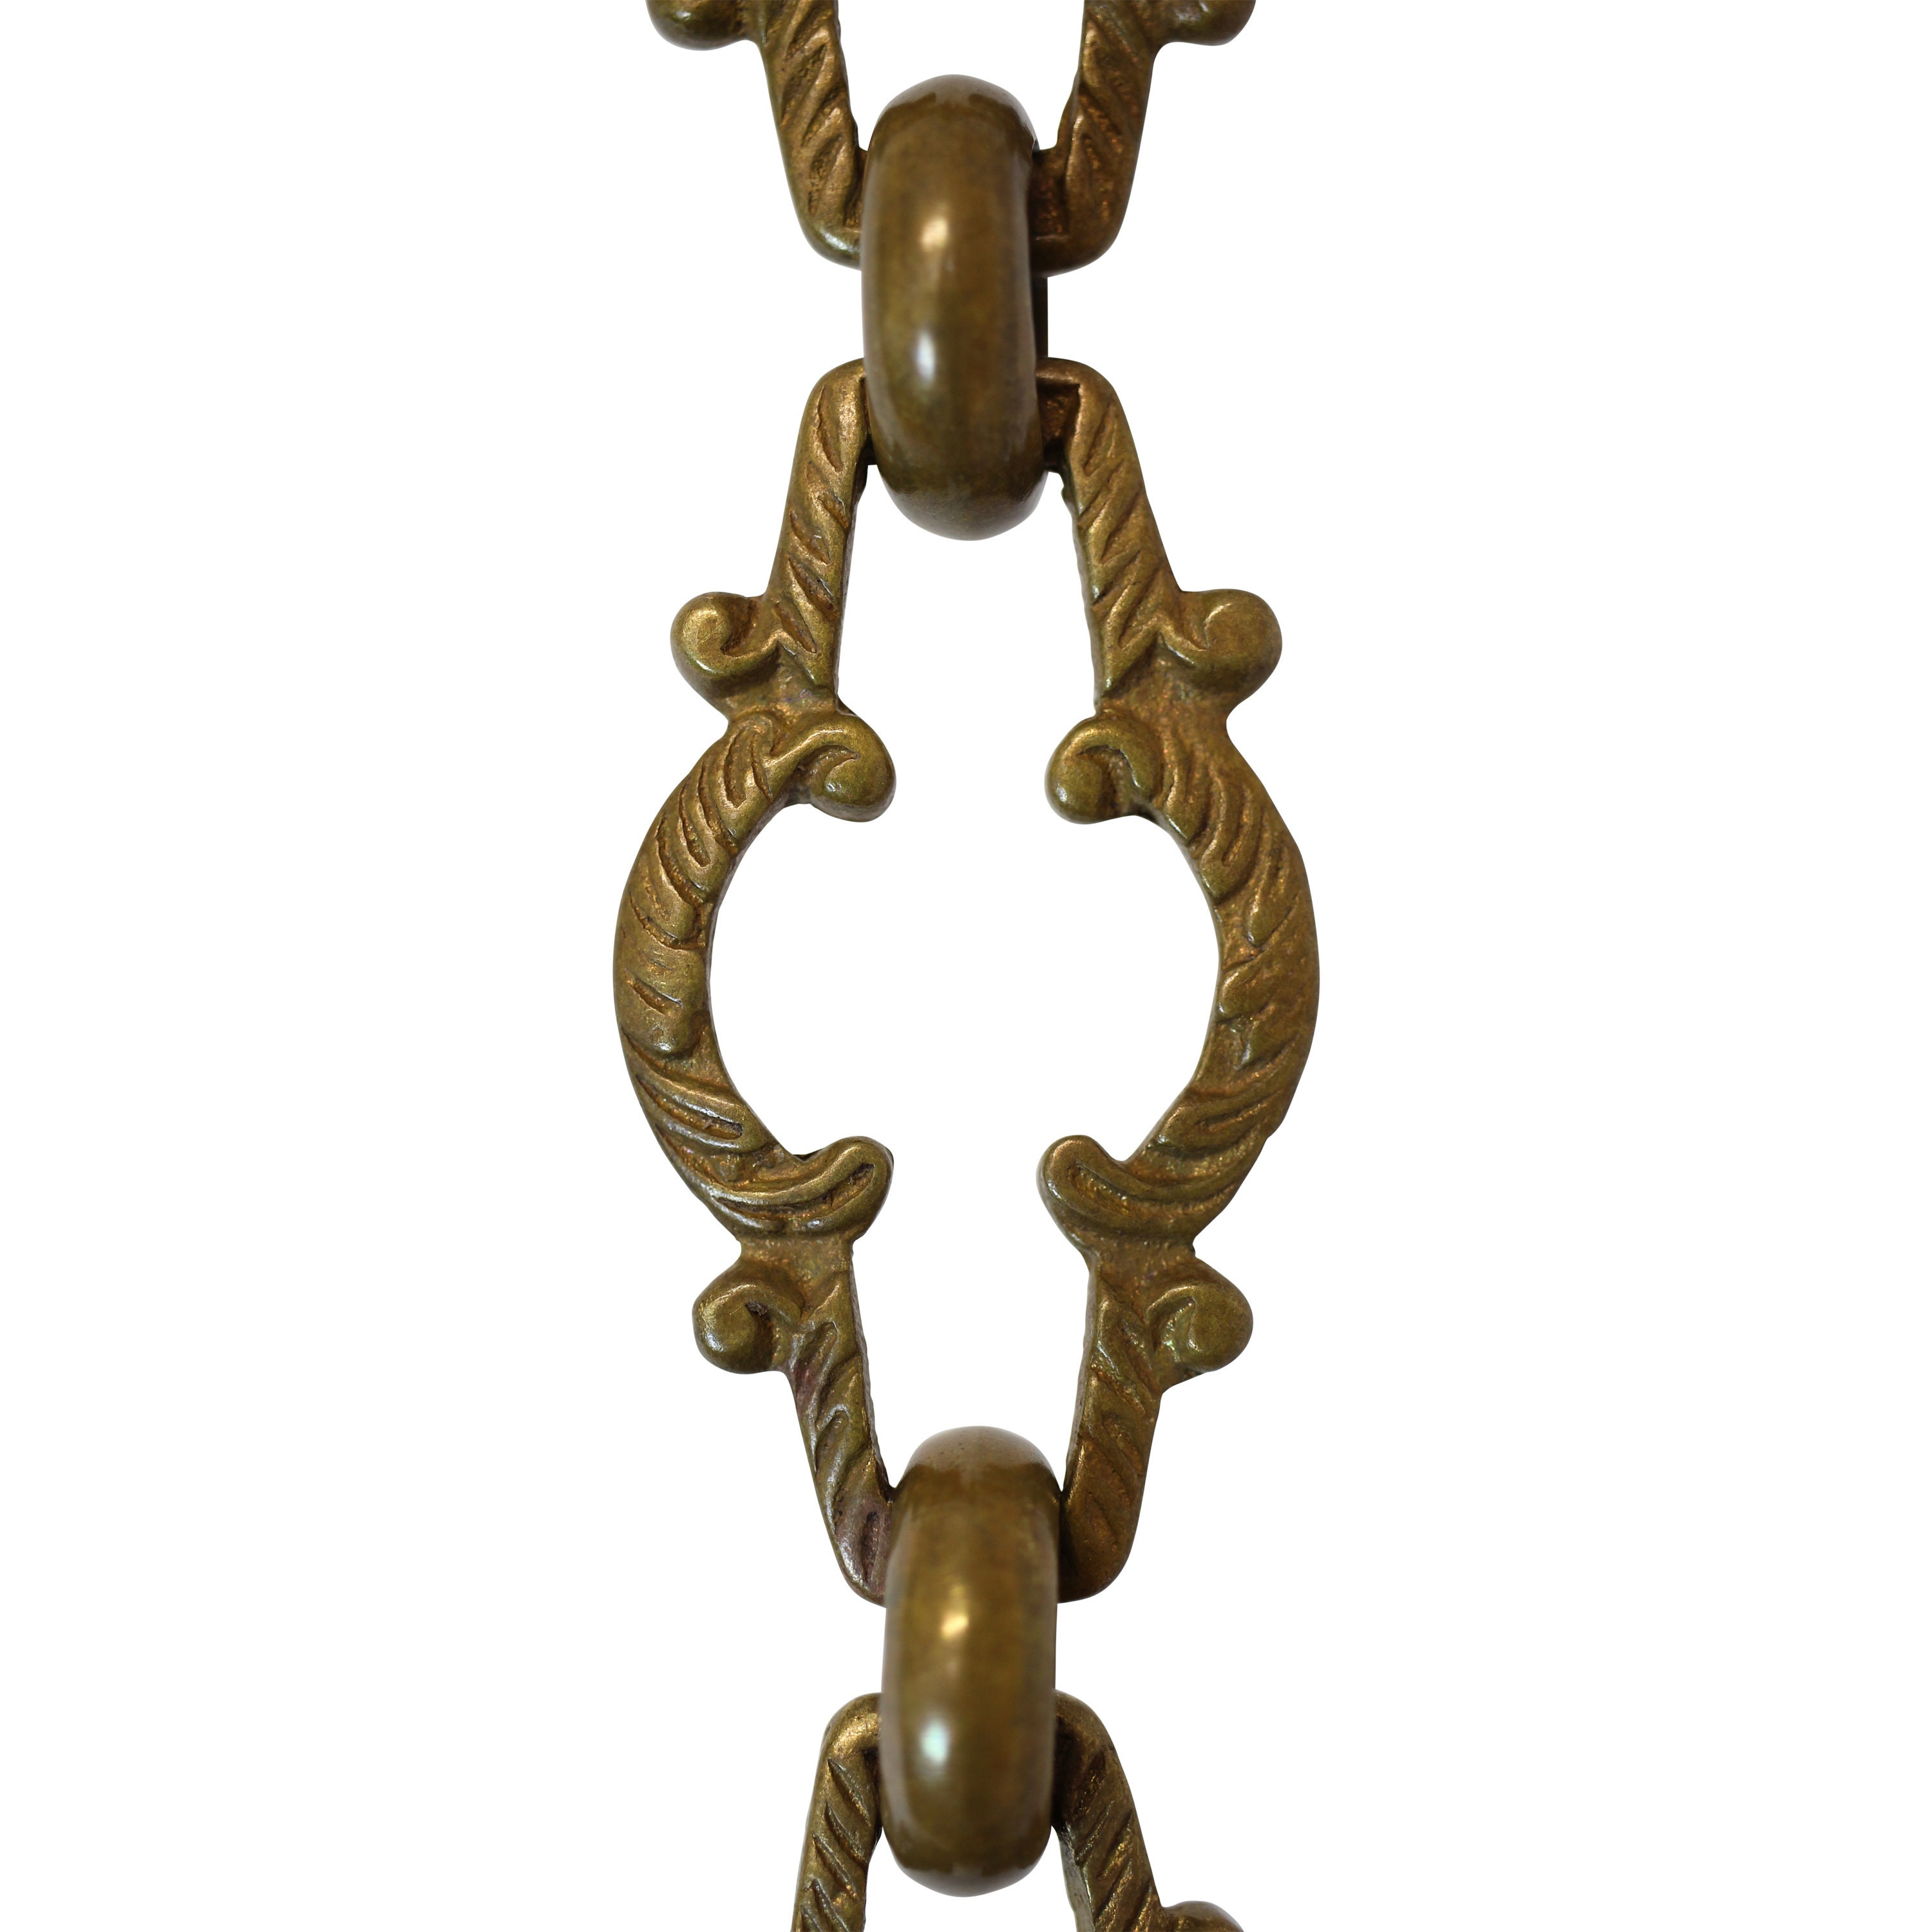 RCH Supply Company Rectangular Unwelded Decorative Fixture Chain; Antique Brass